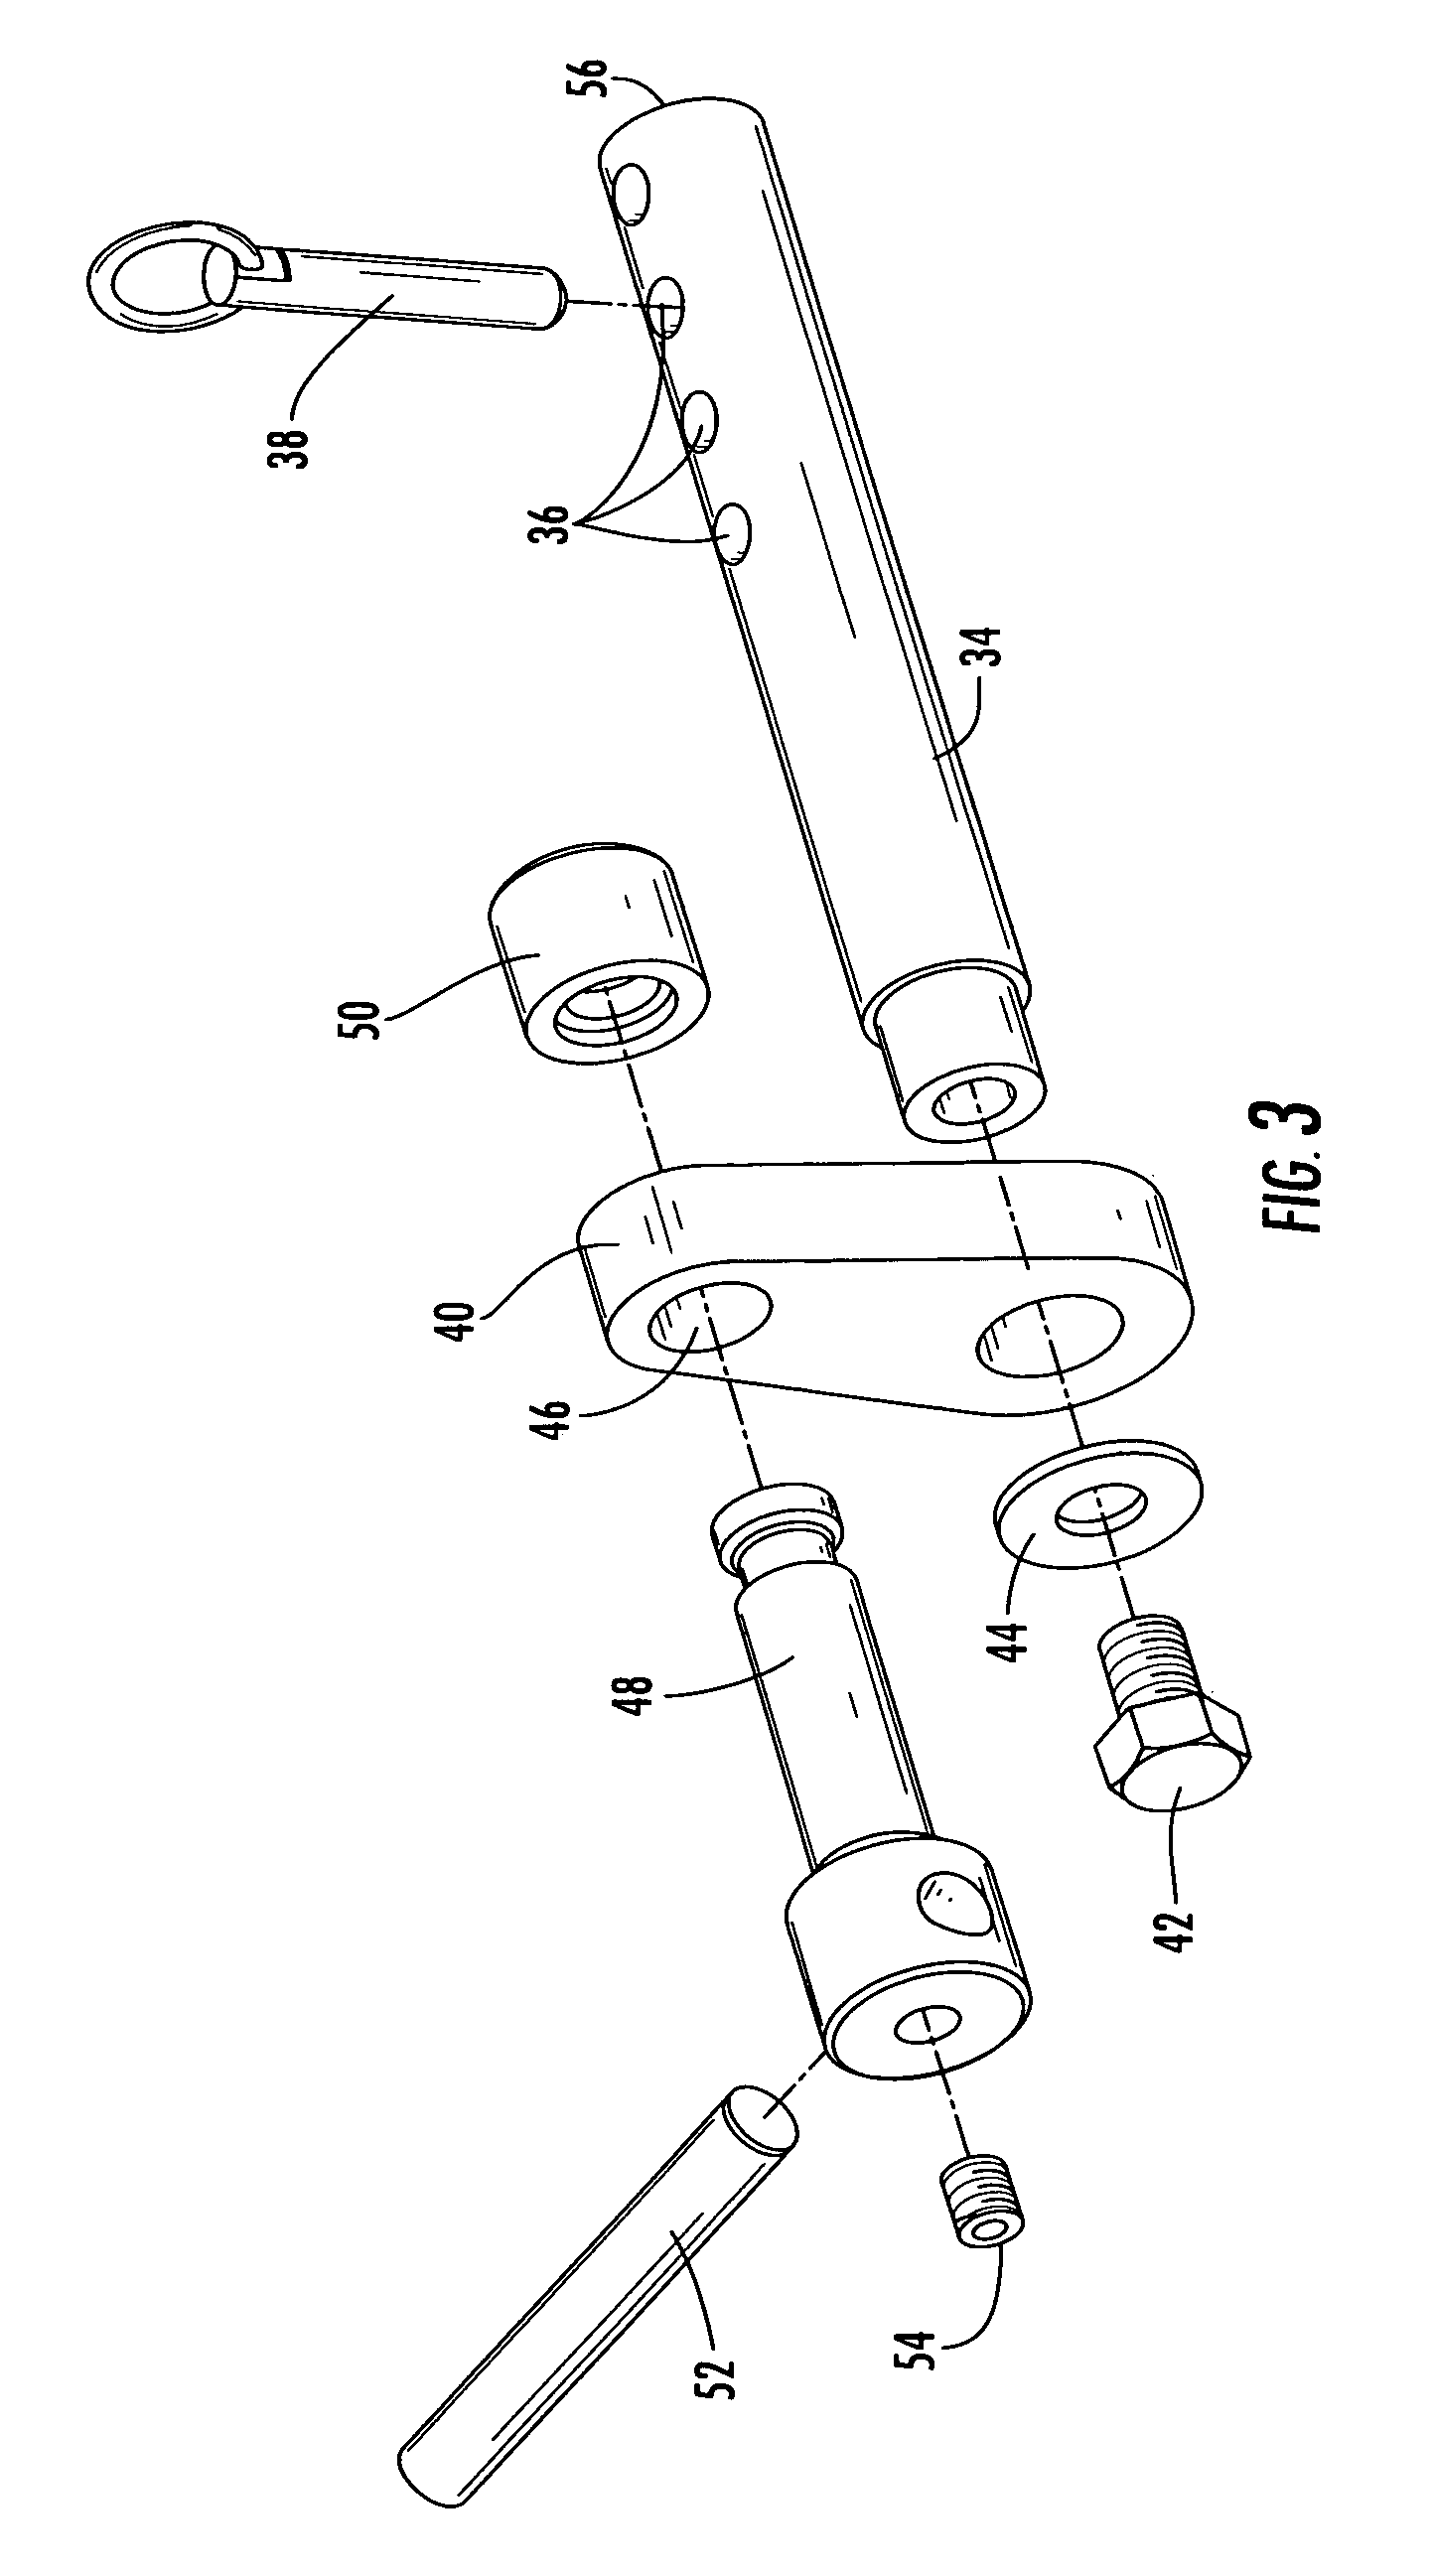 Rotary tube notching apparatus